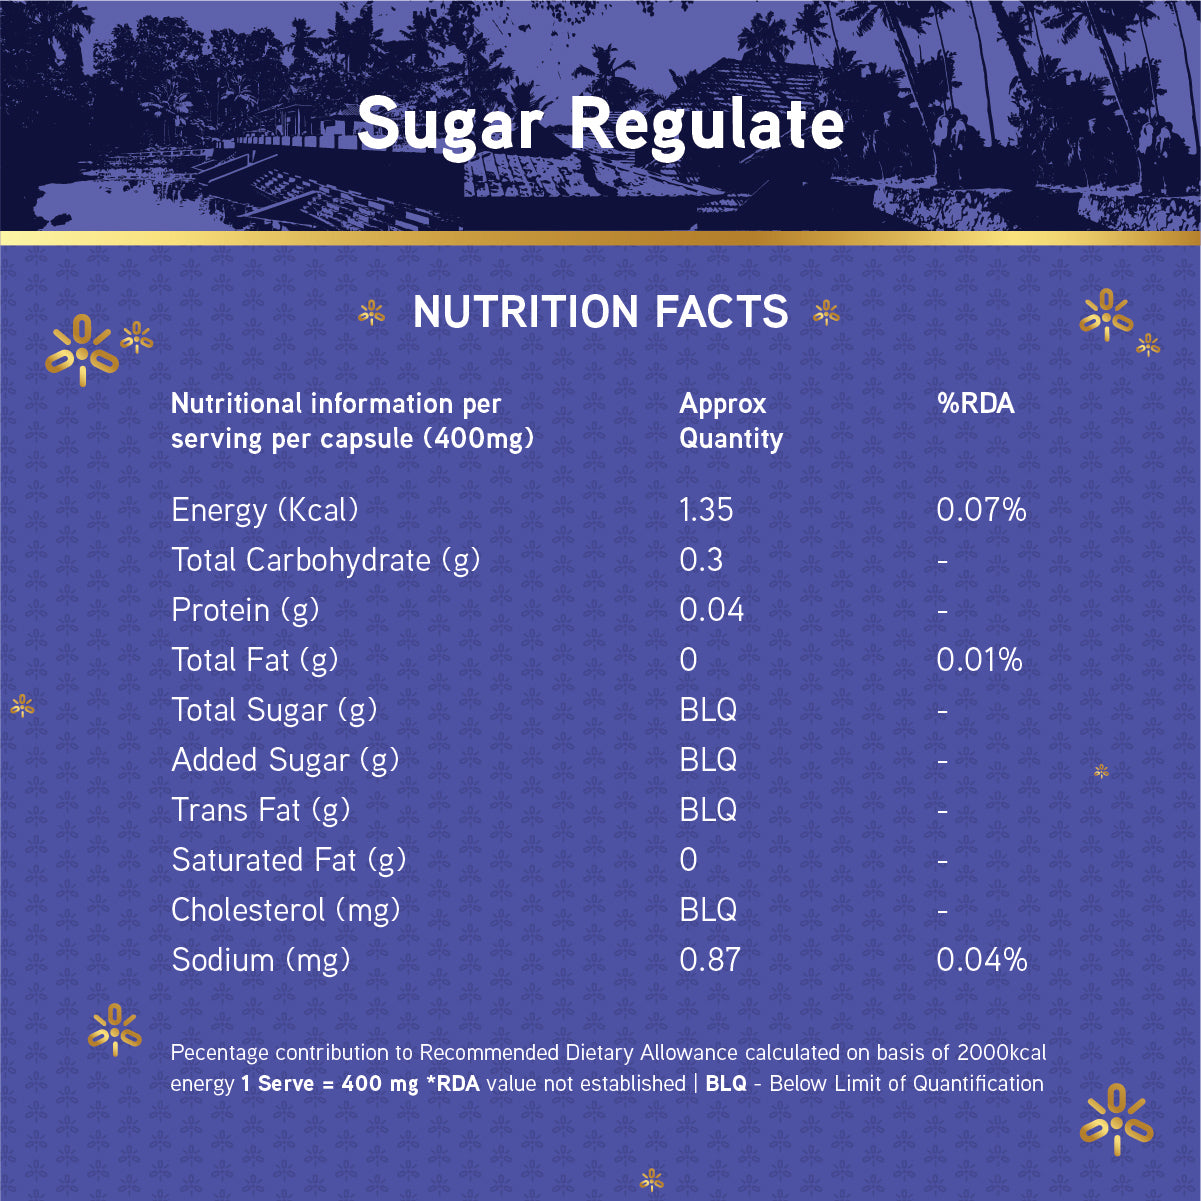 Sugar Regulate - Nutritional Facts